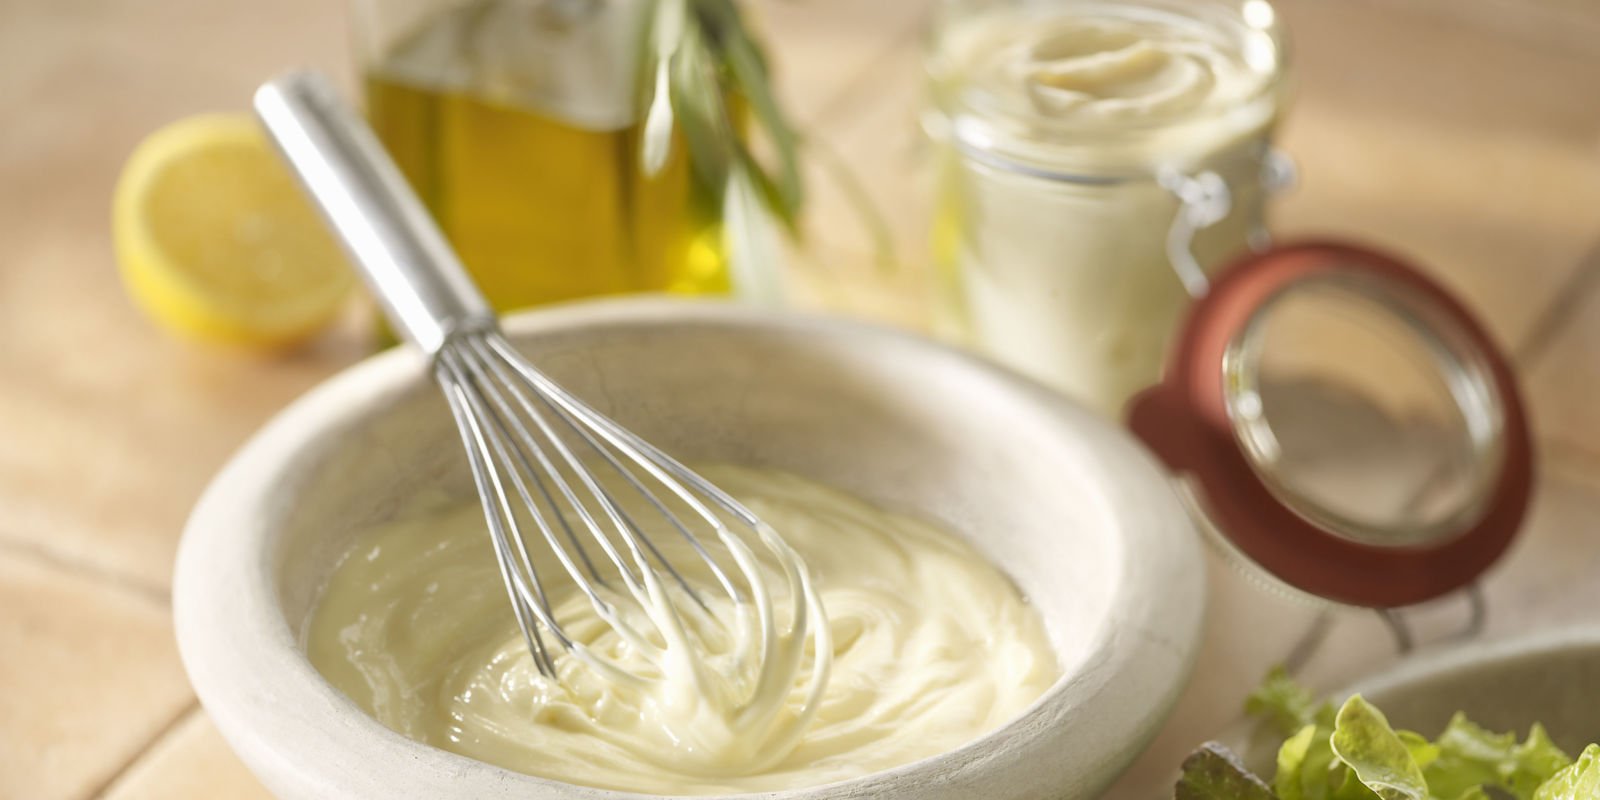 How to make mayonnaise at home